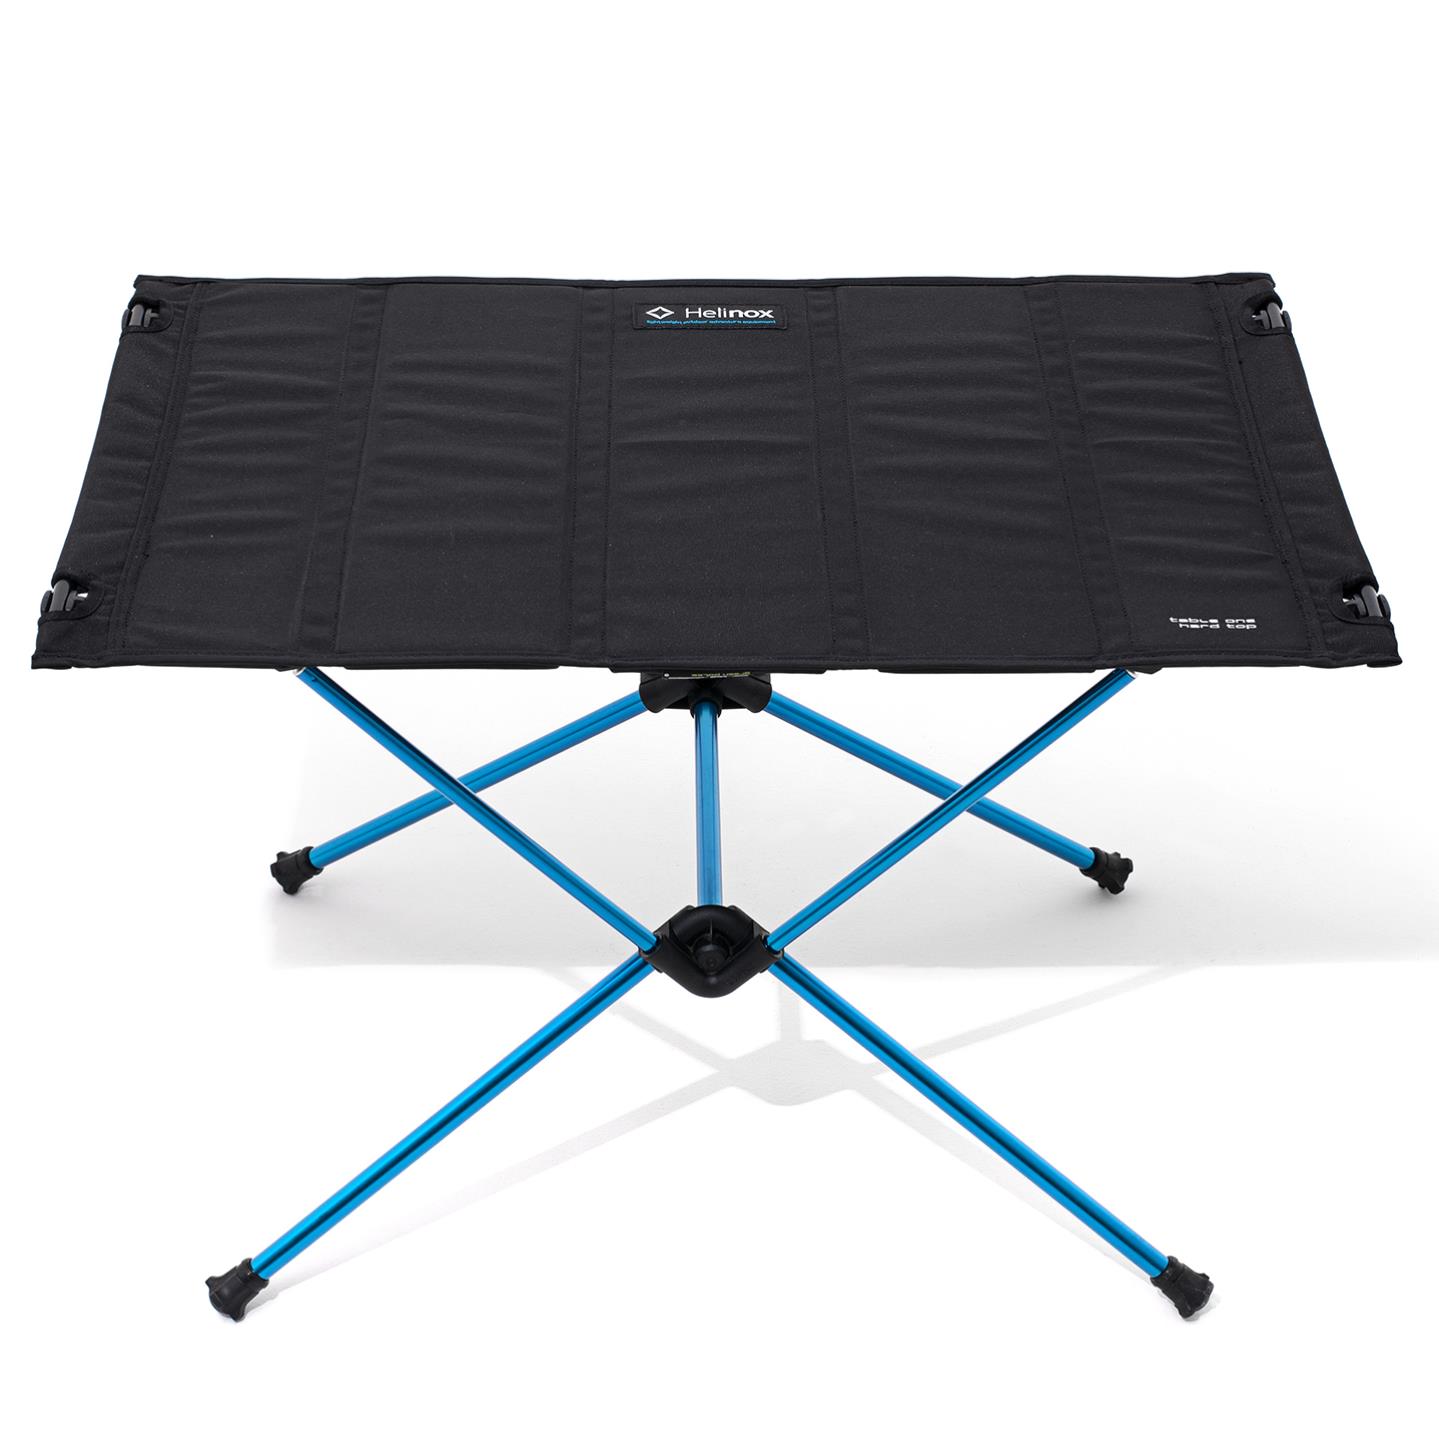 Helinox Table One Hard Top Campingtisch black/blue